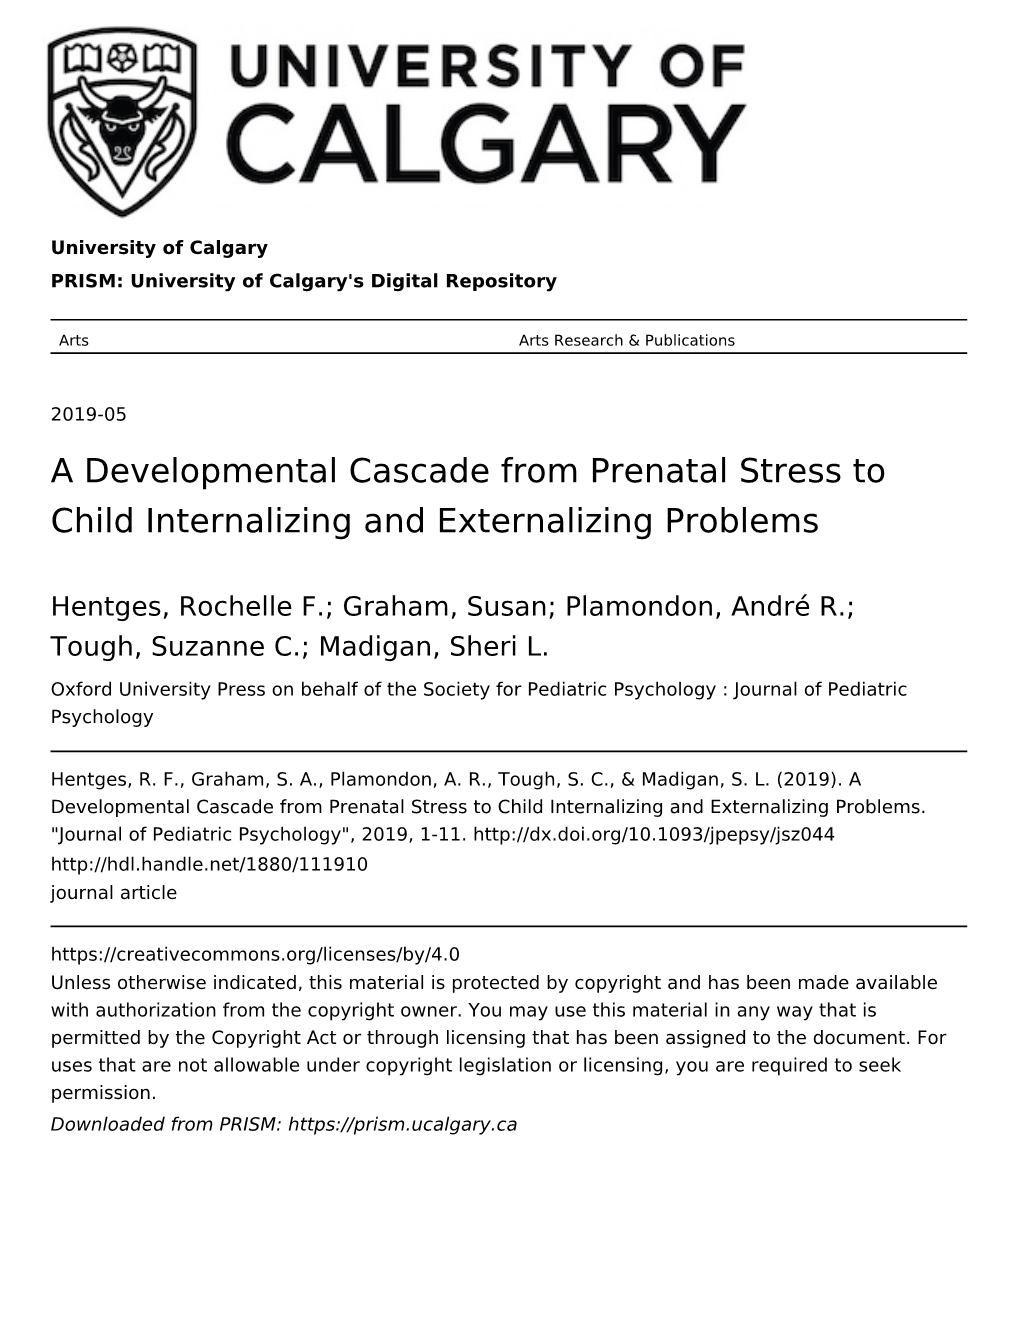 A Developmental Cascade from Prenatal Stress to Child Internalizing and Externalizing Problems